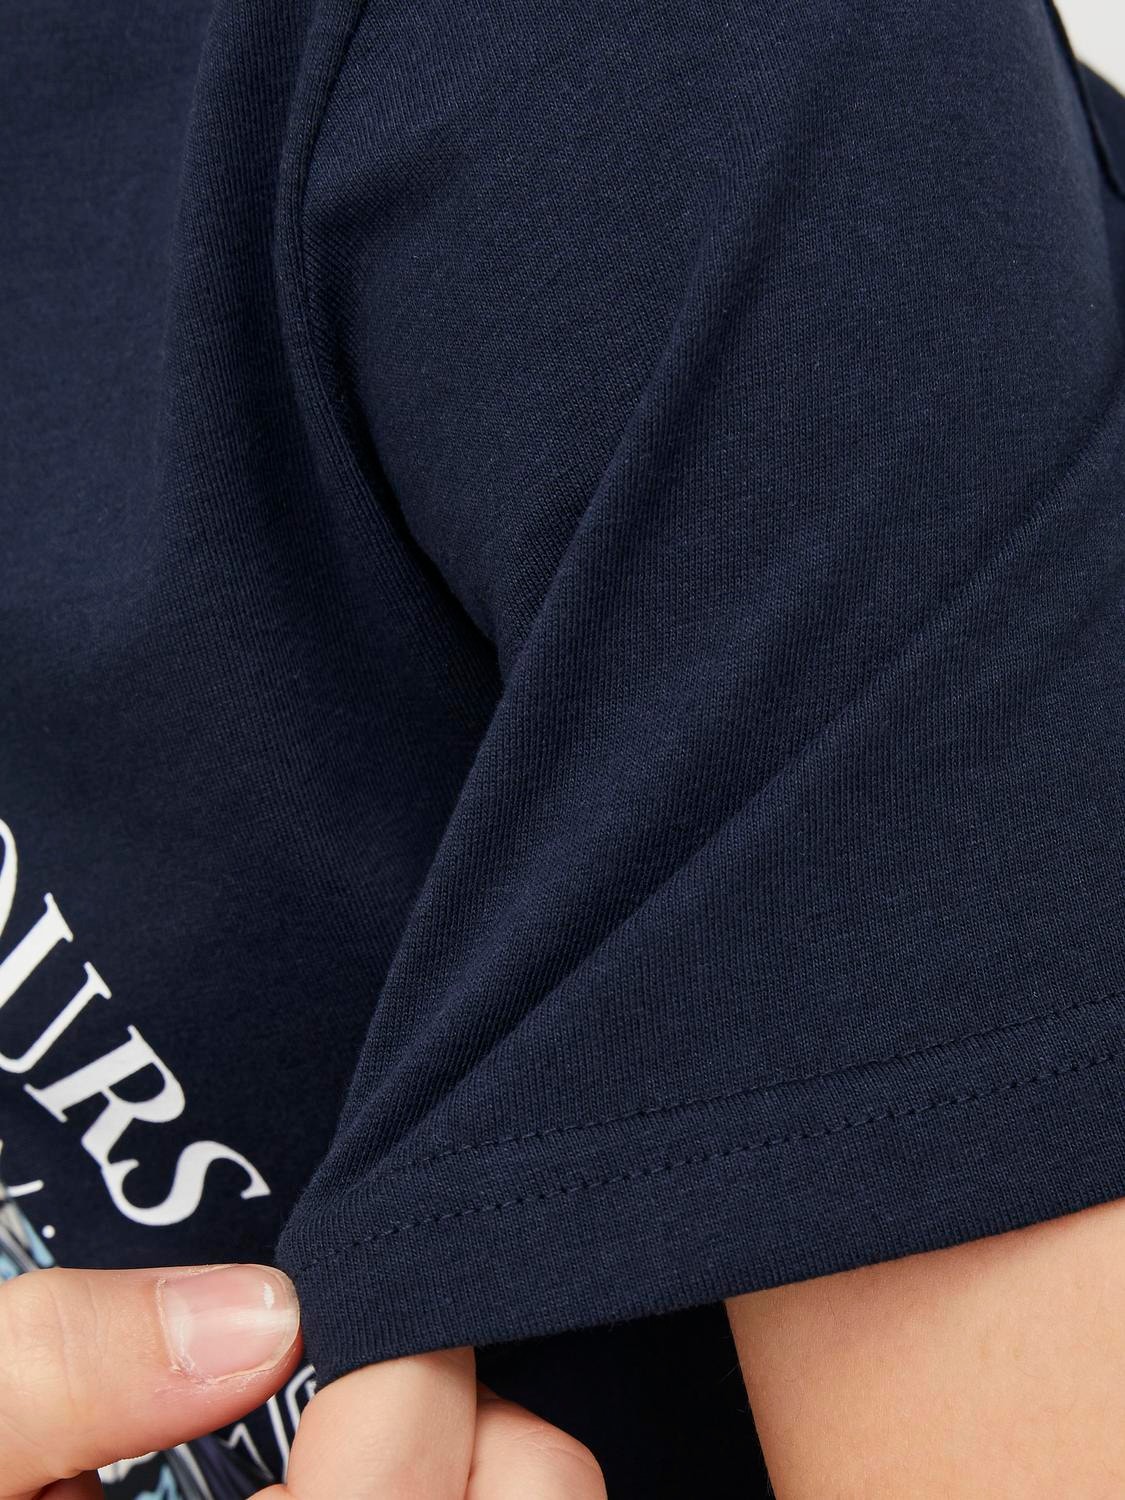 Jack & Jones Camiseta Estampado Para chicos -Sky Captain - 12253965